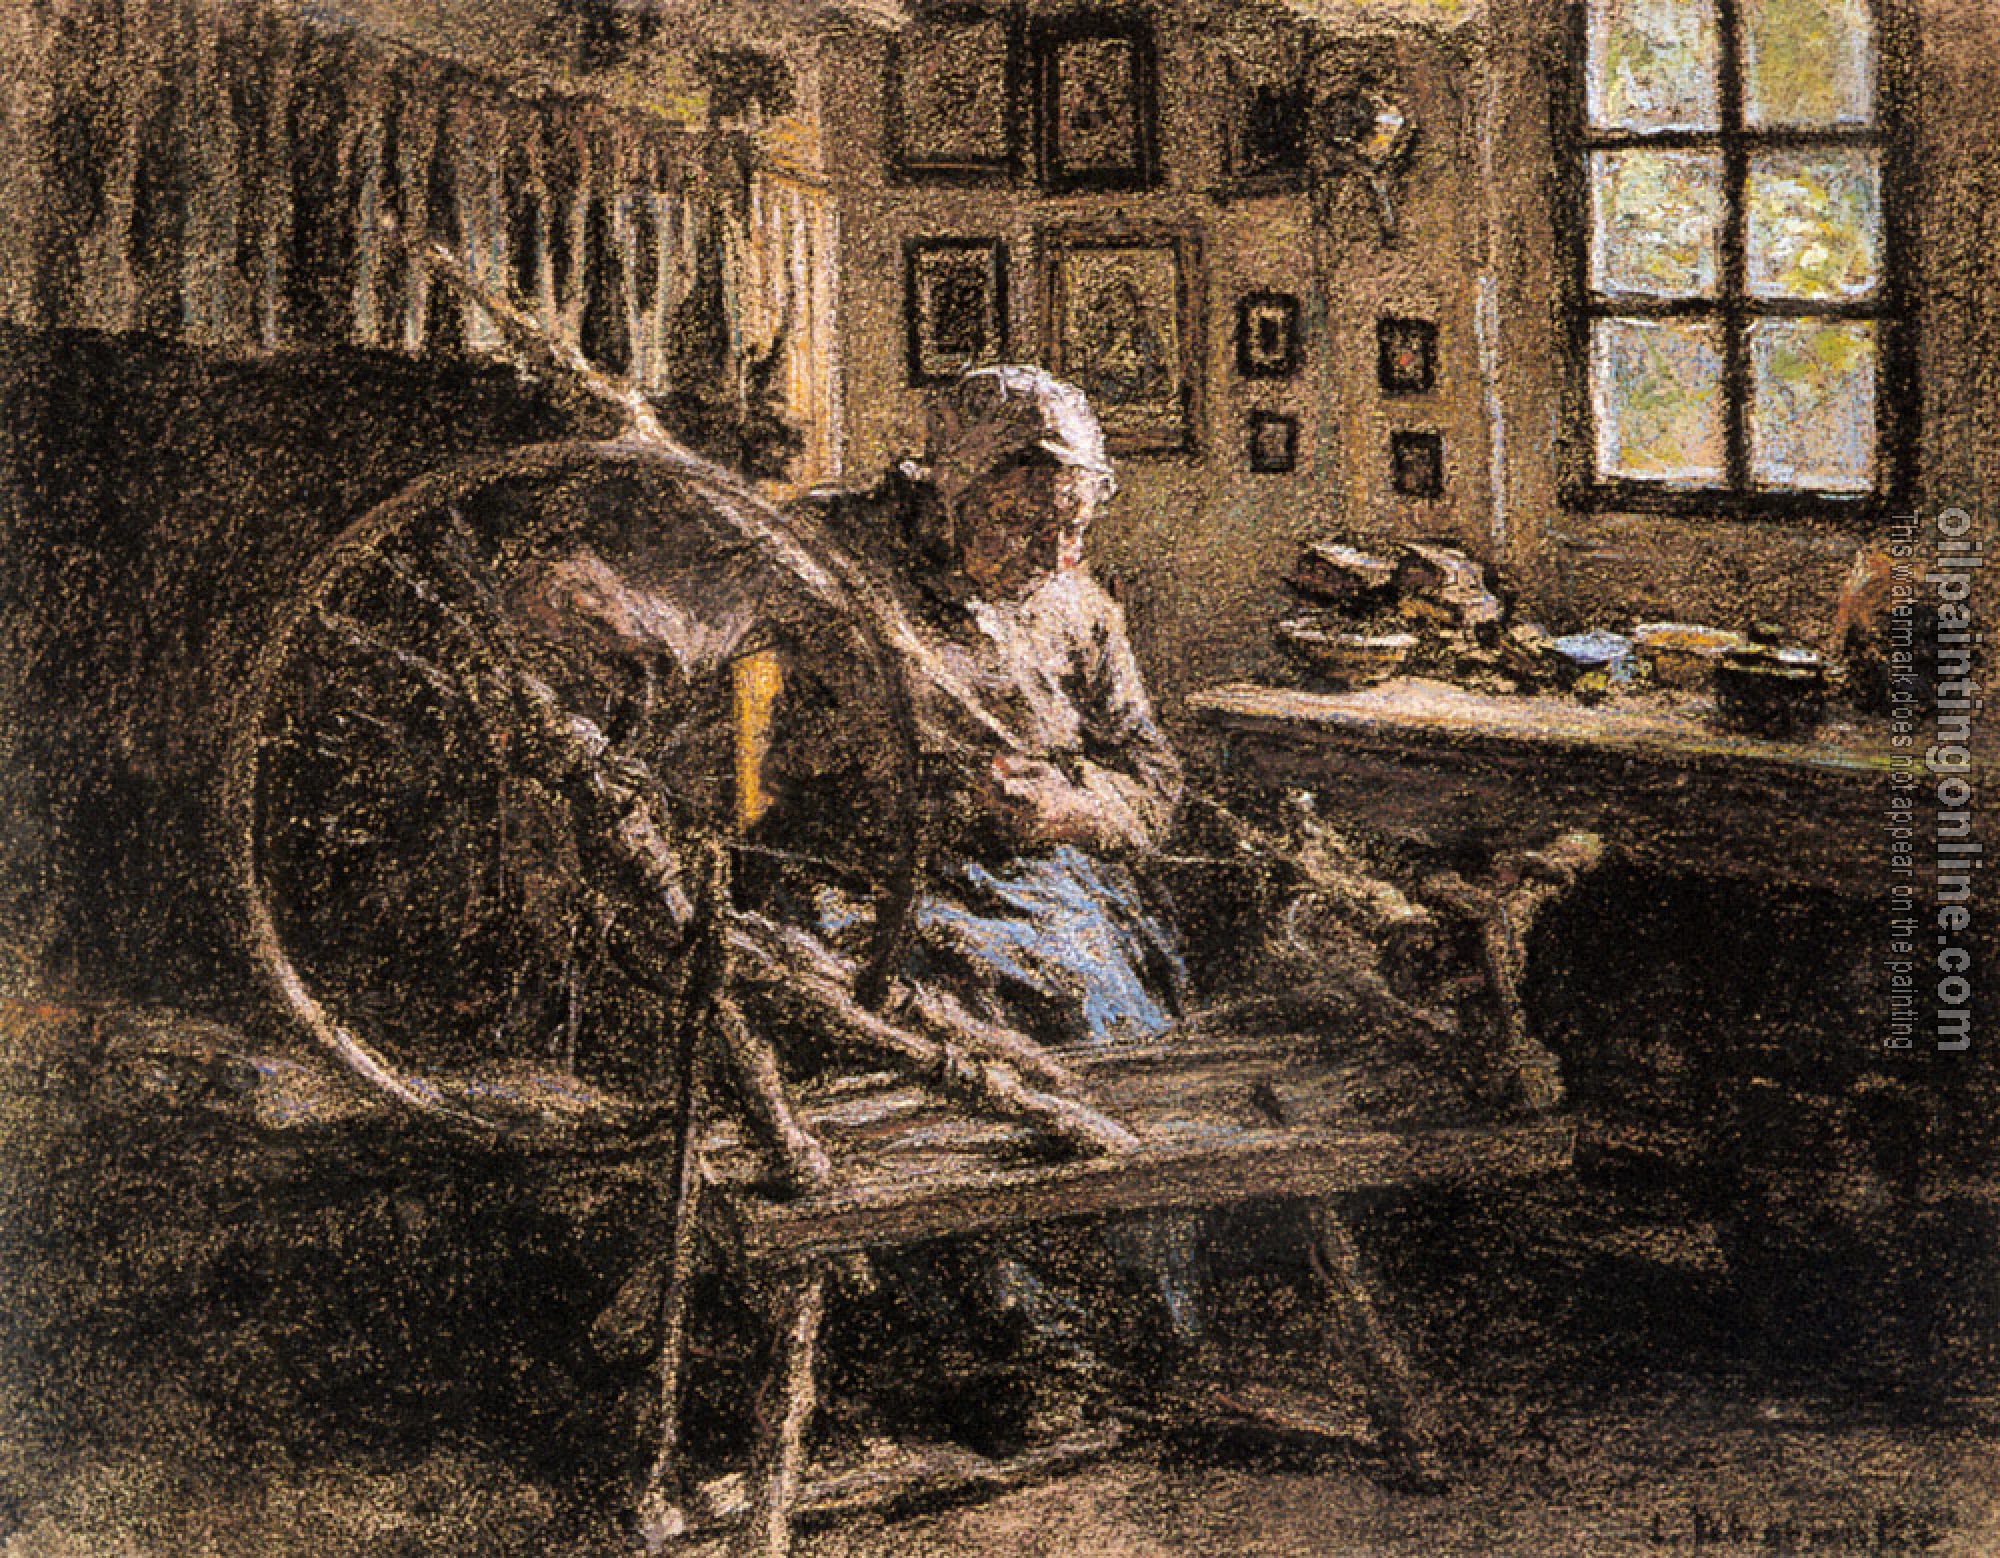 Lhermitte, Leon Augustin - The Spinning Wheel